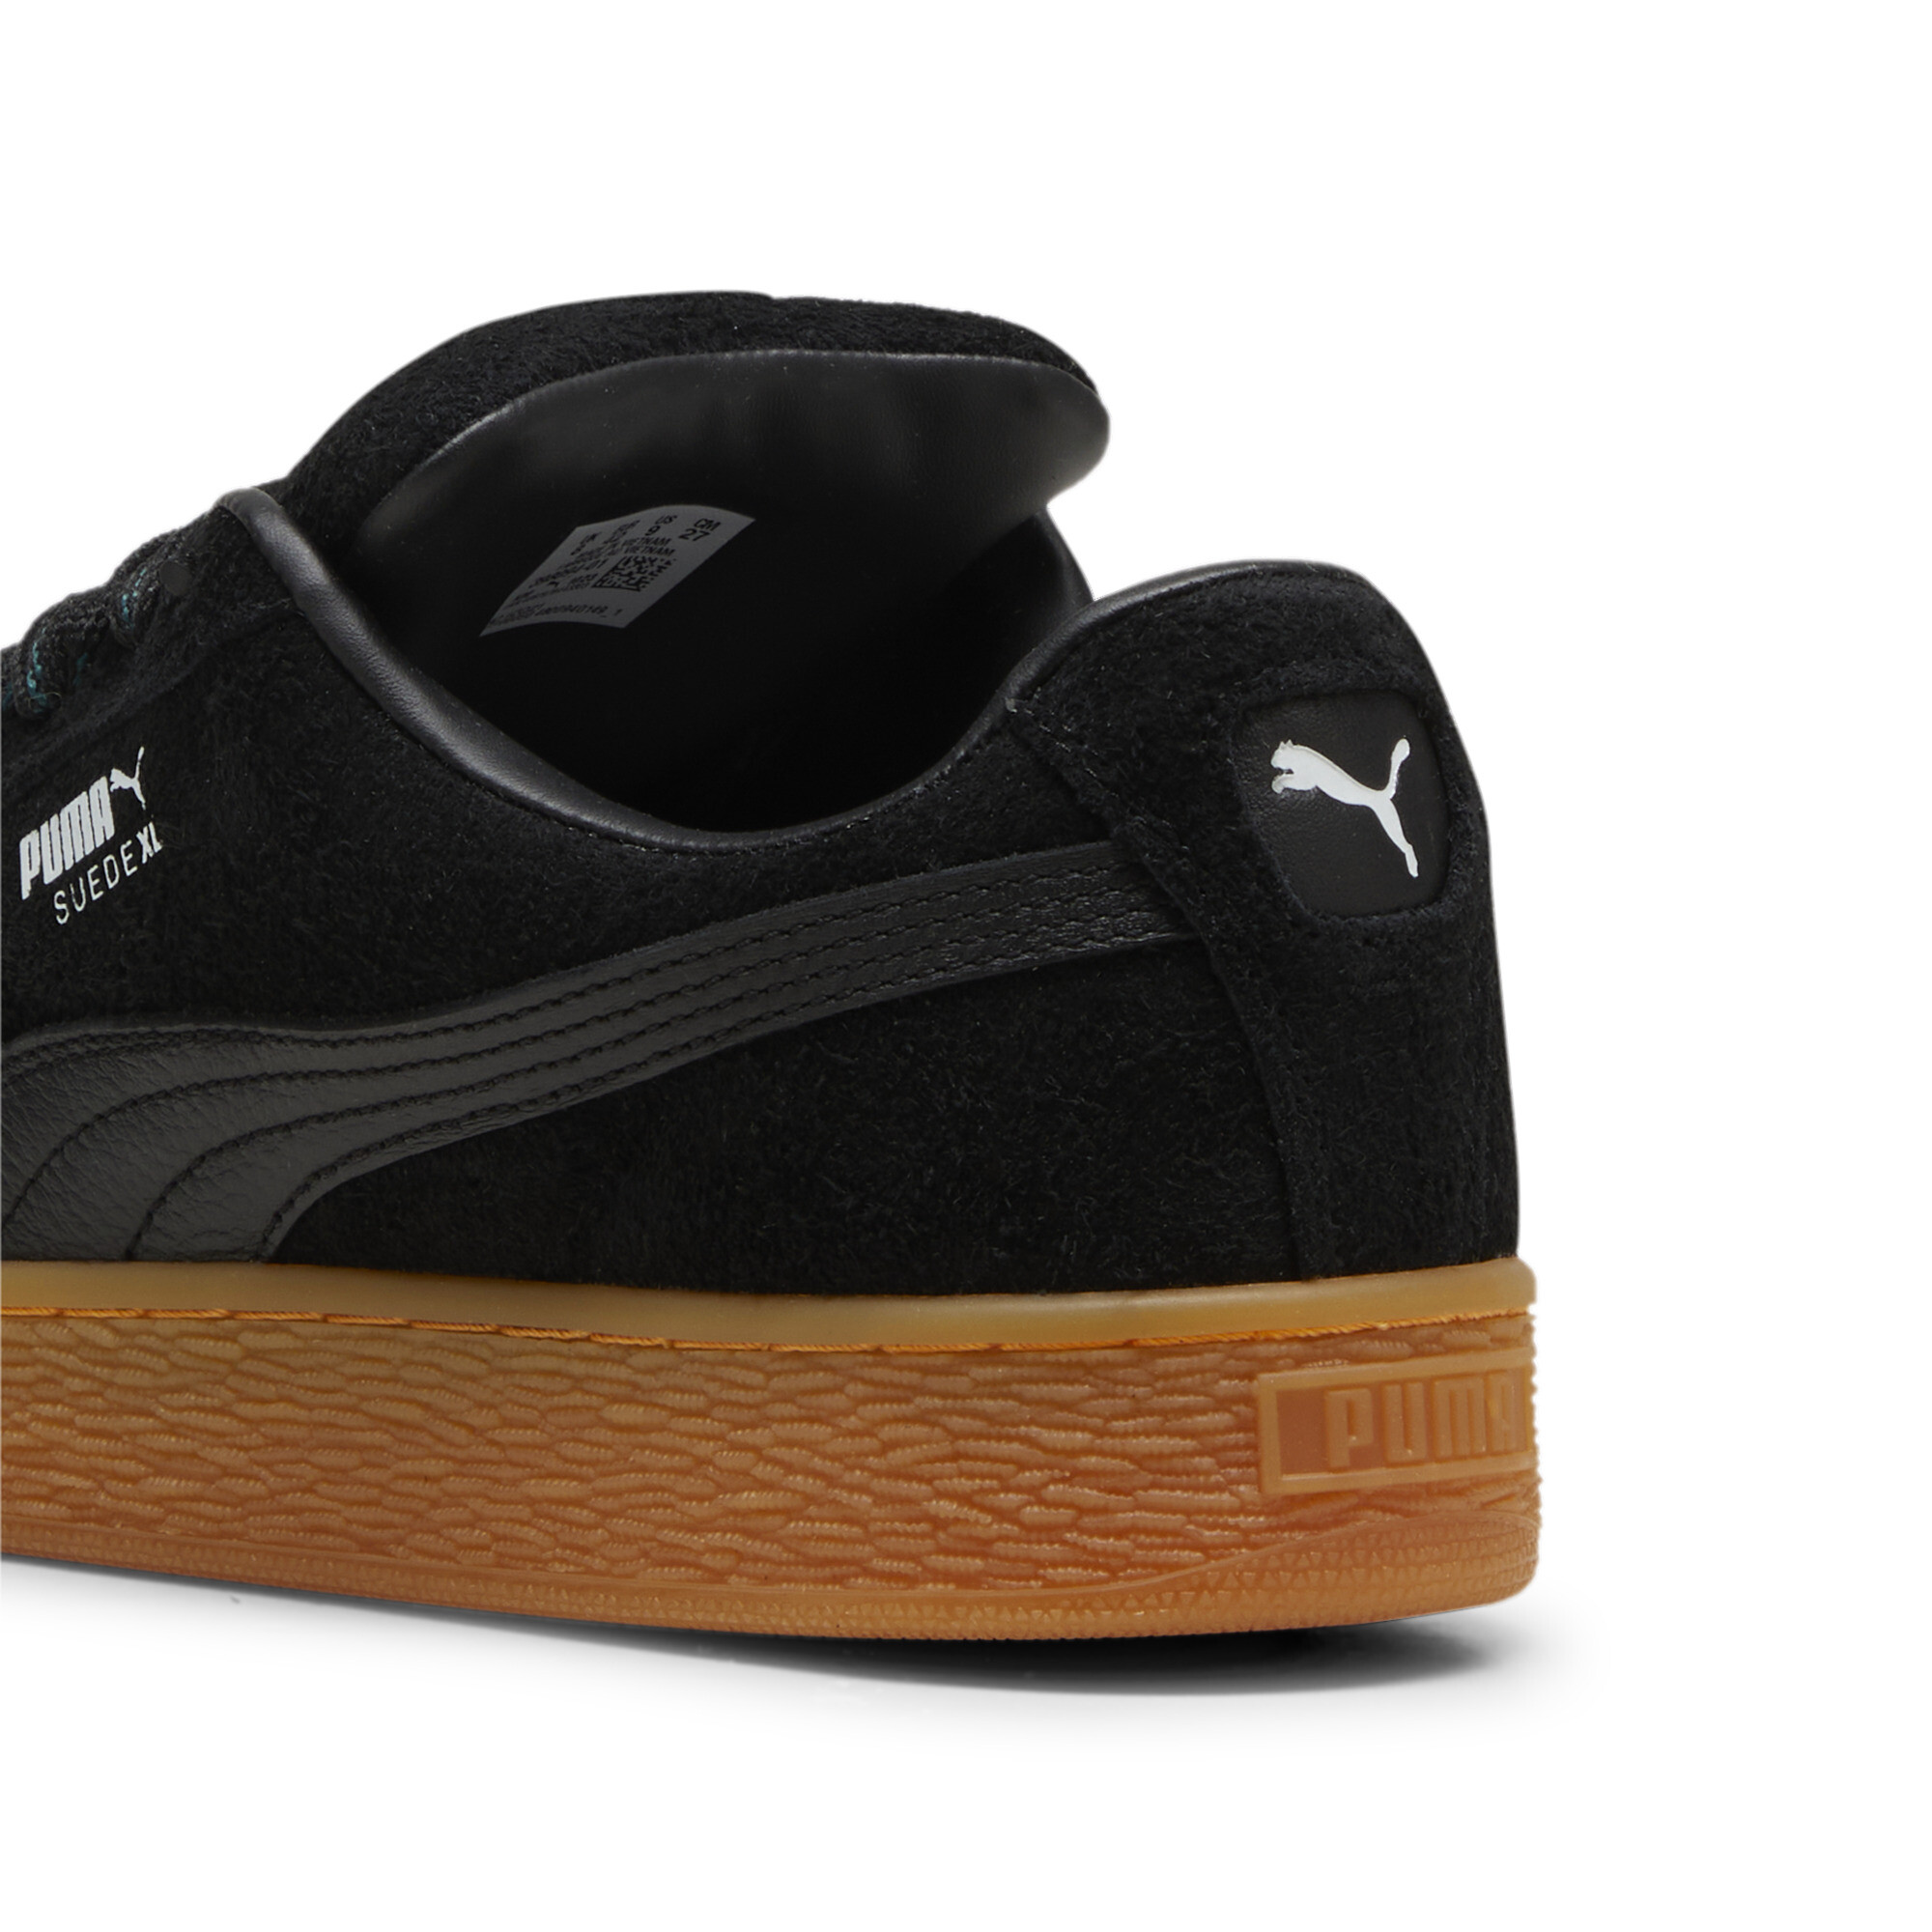 Puma Suede XL Flecked Unisex, Black, Size 40, Shoes